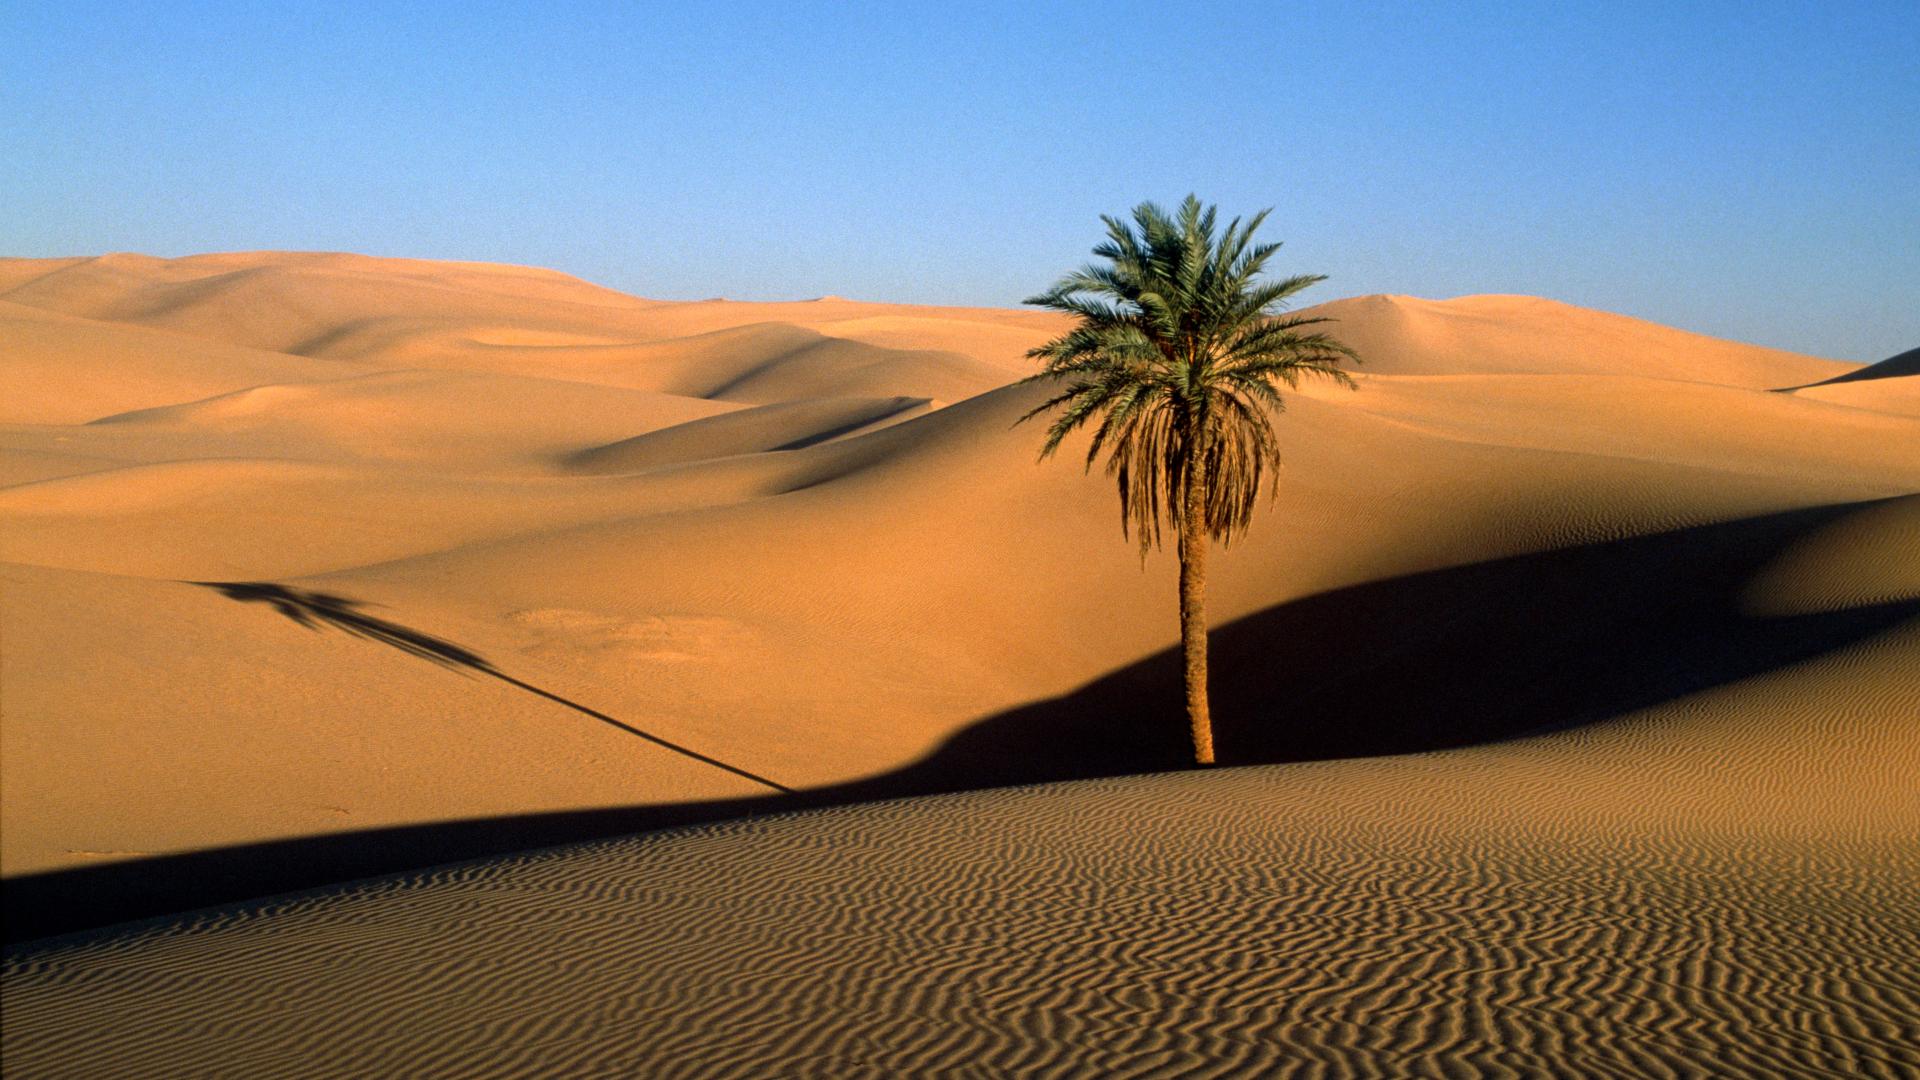 landscapes, deserts, sand dunes, palm trees - desktop wallpaper